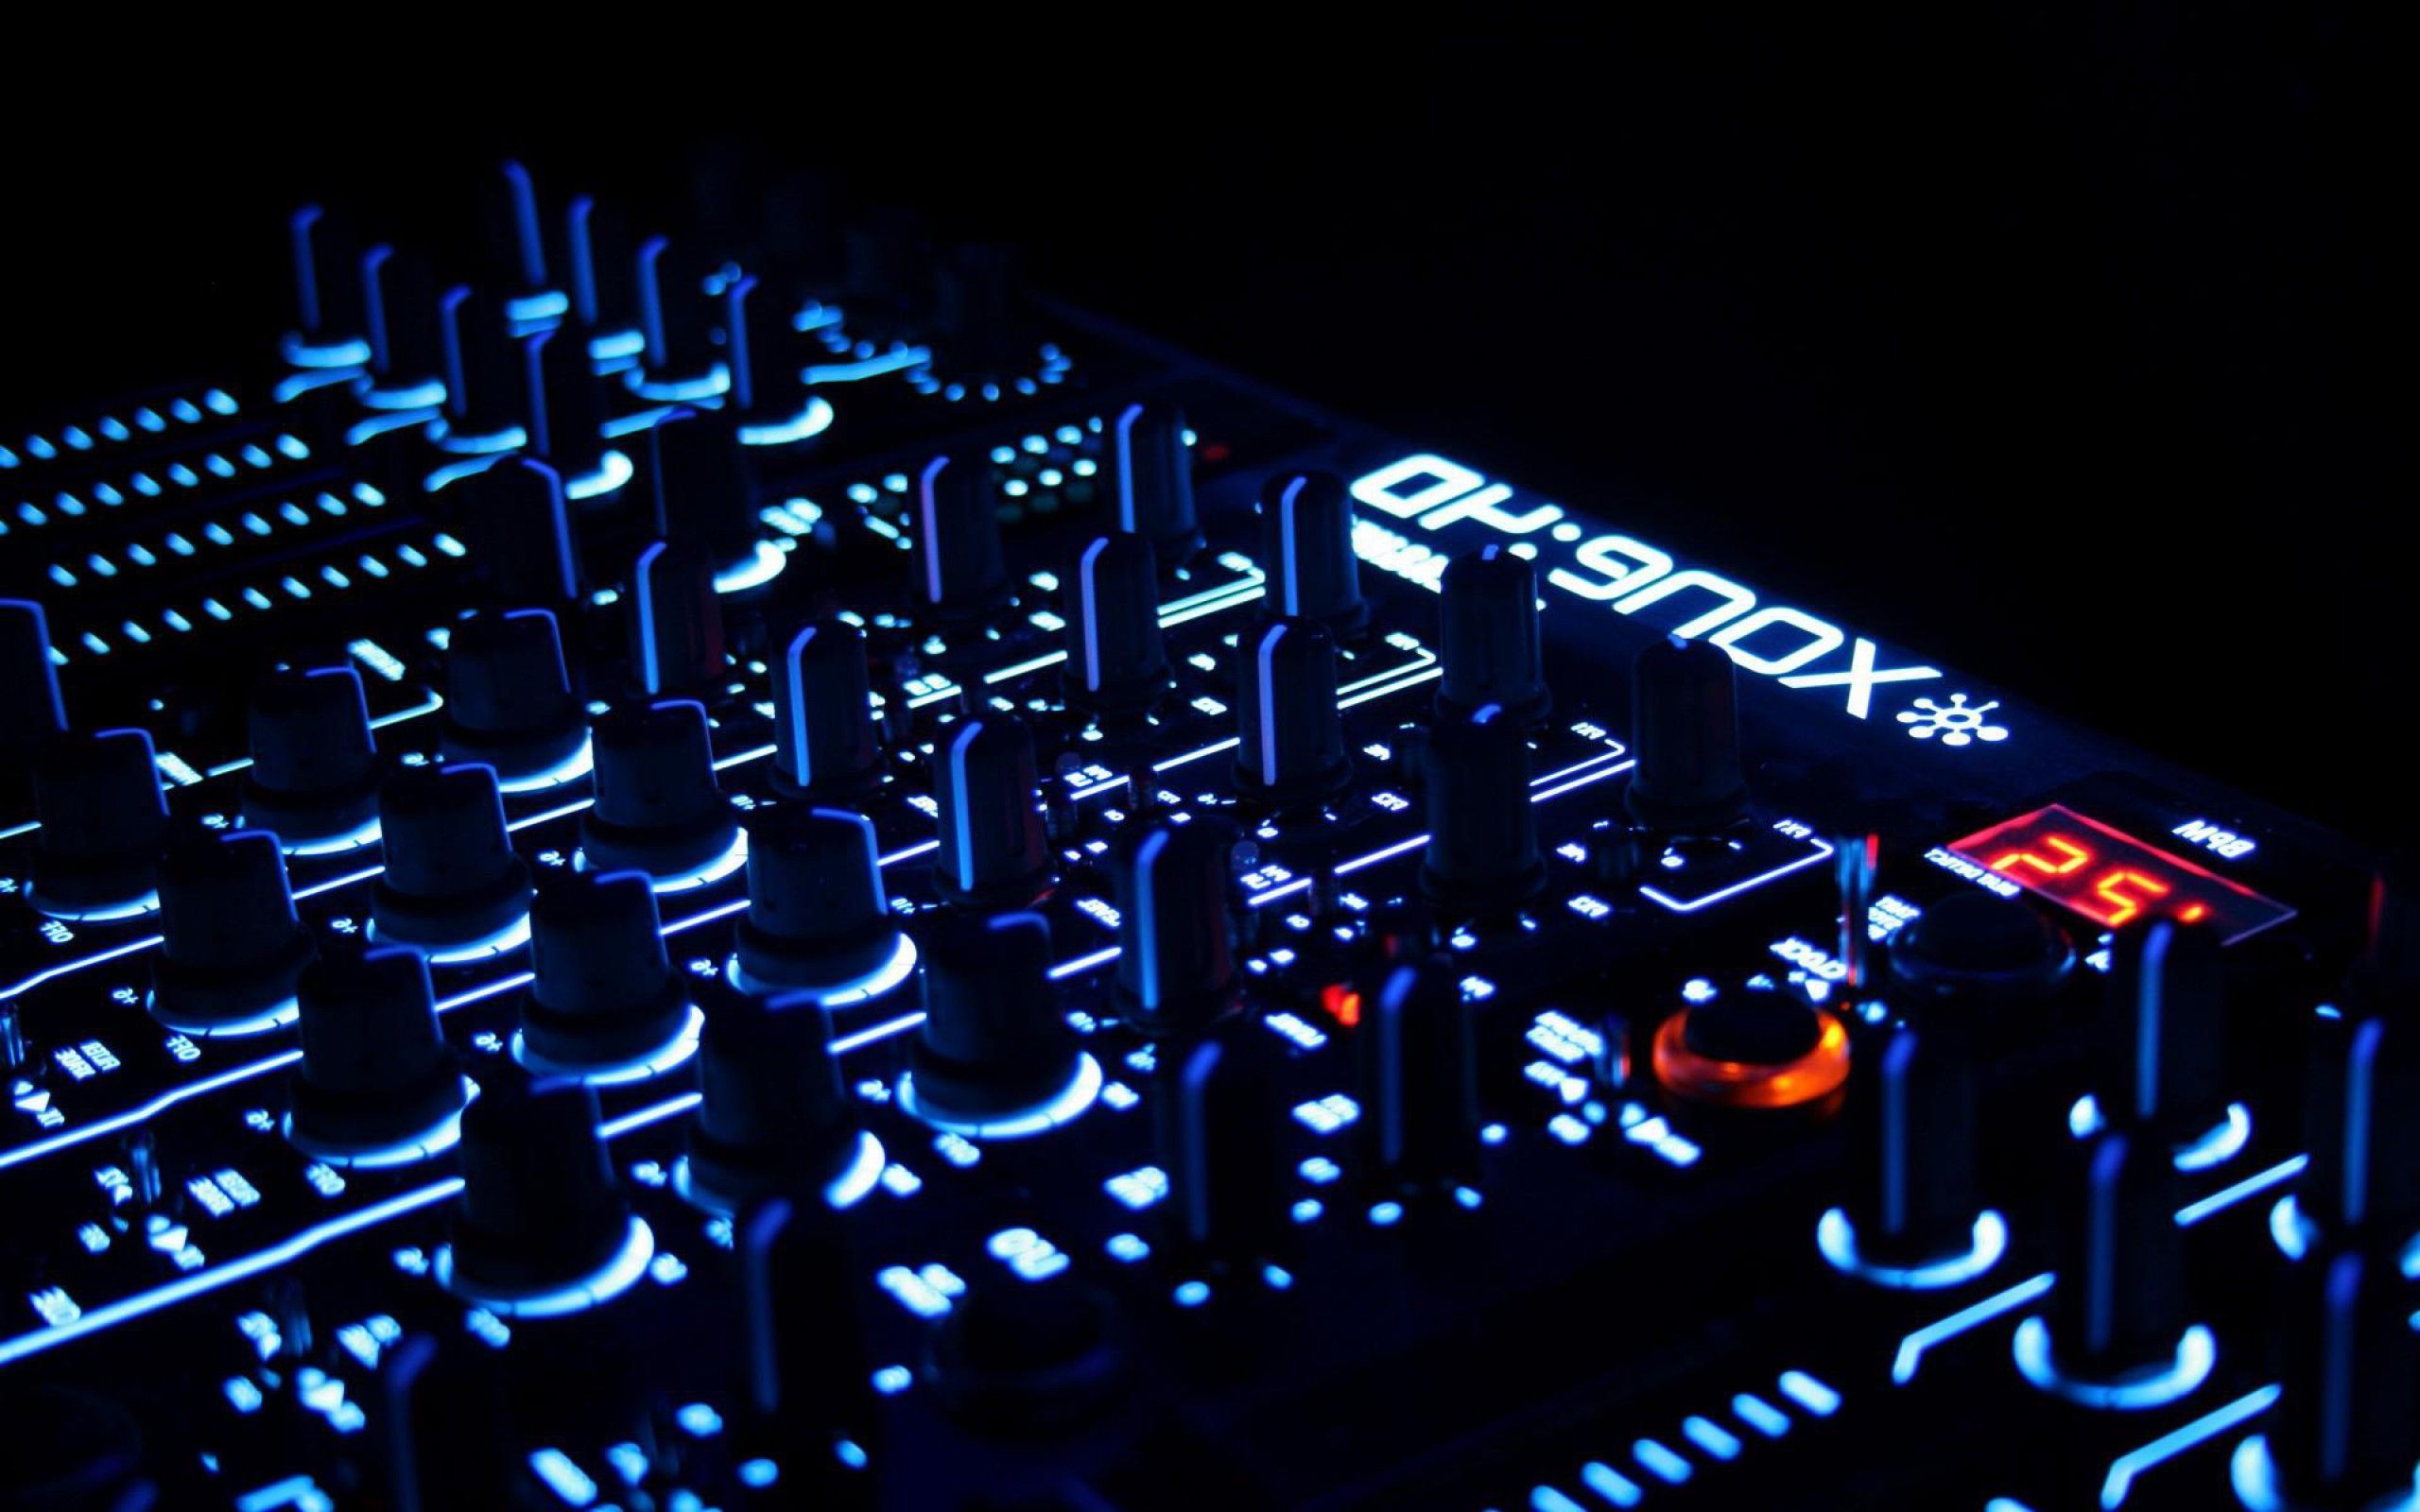 Wallpaper  black DJ house music buttons mixing consoles light shape  darkness 1920x1080 px close up recording 1920x1080  goodfon  536359   HD Wallpapers  WallHere